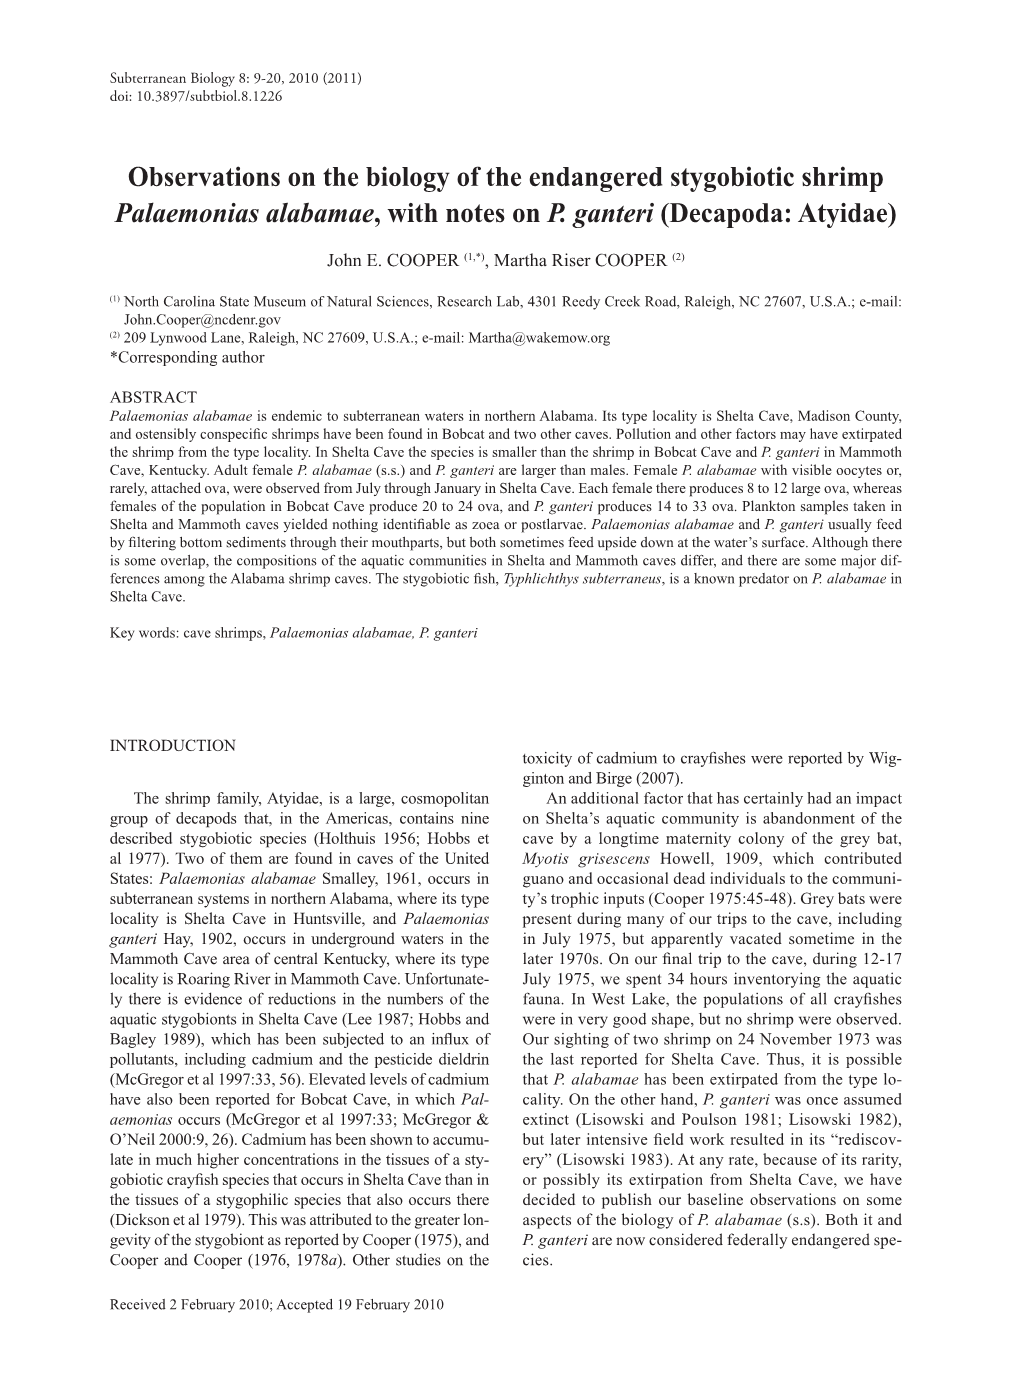 Observations on the Biology of the Endangered Stygobiotic Shrimp Palaemonias Alabamae, with Notes on P